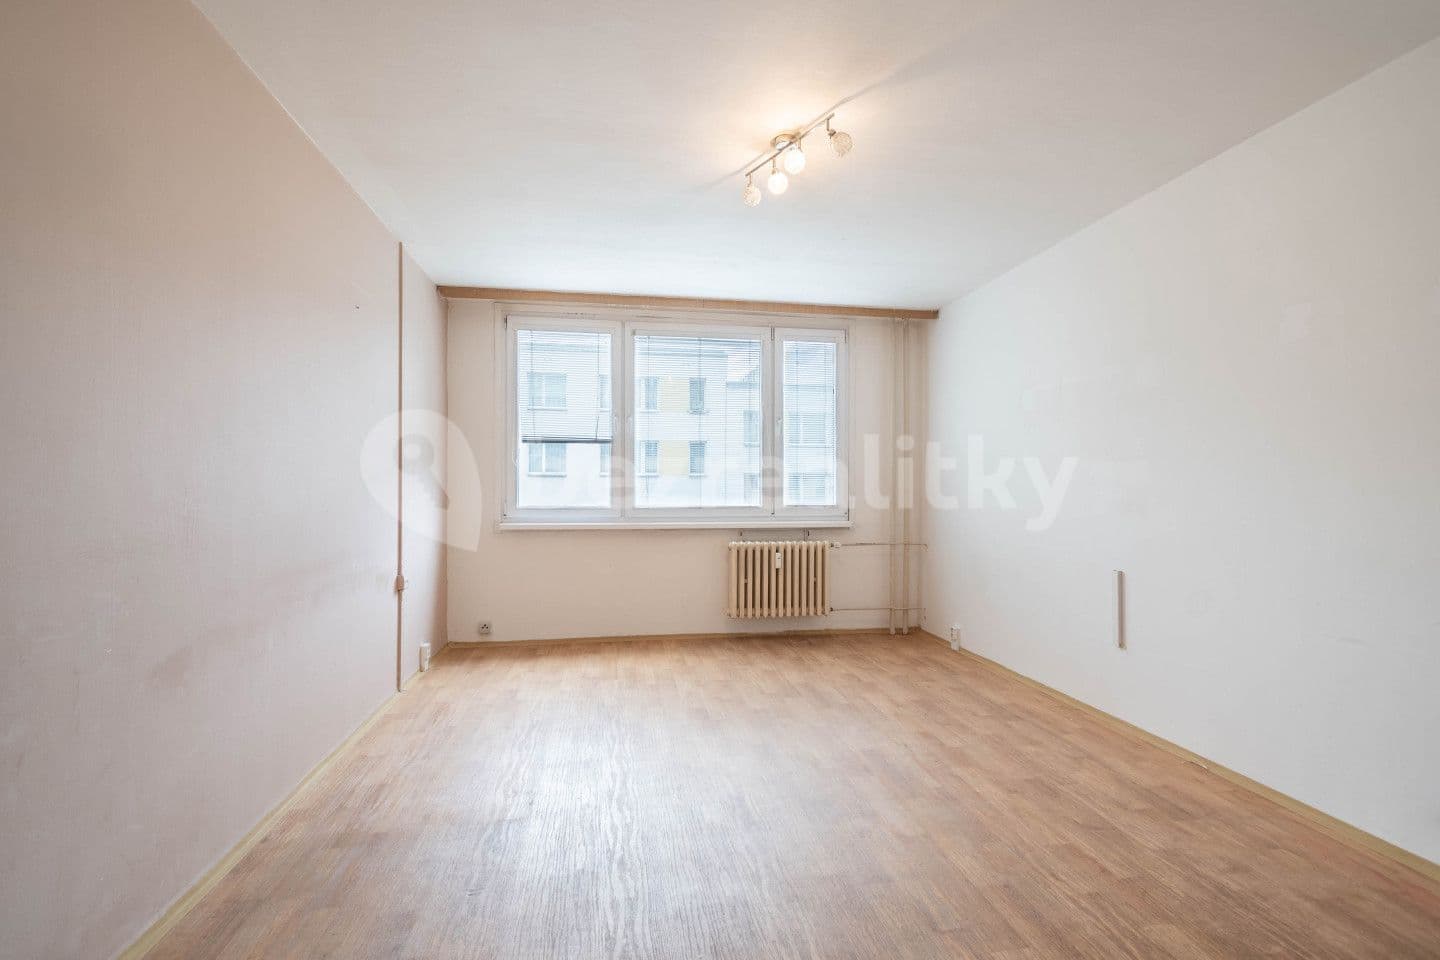 2 bedroom with open-plan kitchen flat for sale, 63 m², Mendelova, Prague, Prague